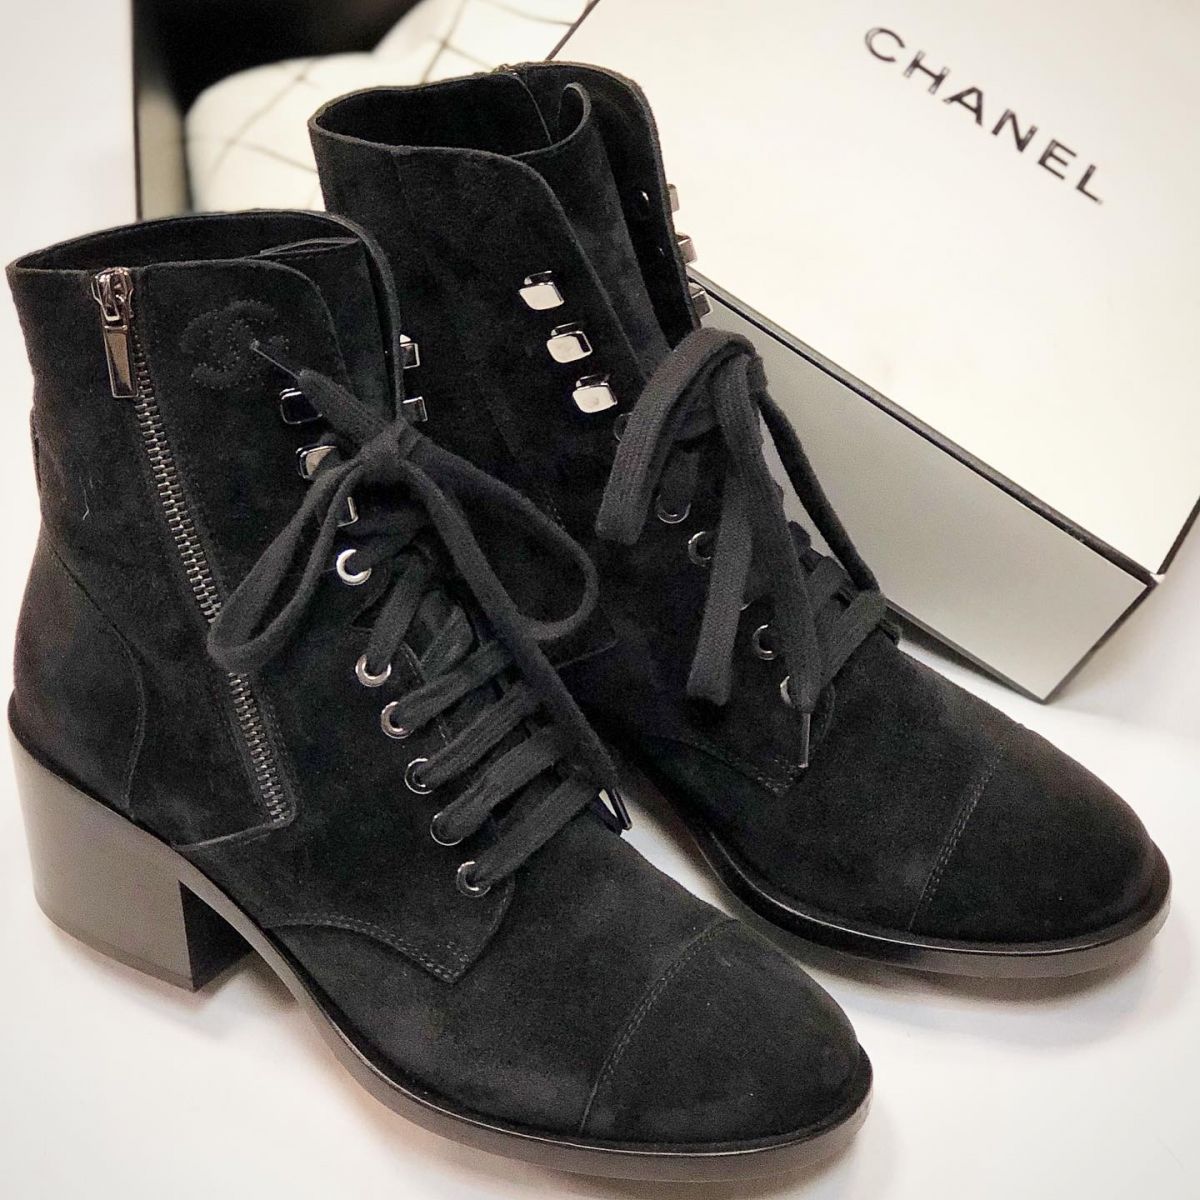 Ботинки Chanel размер 40 цена 30 770 руб